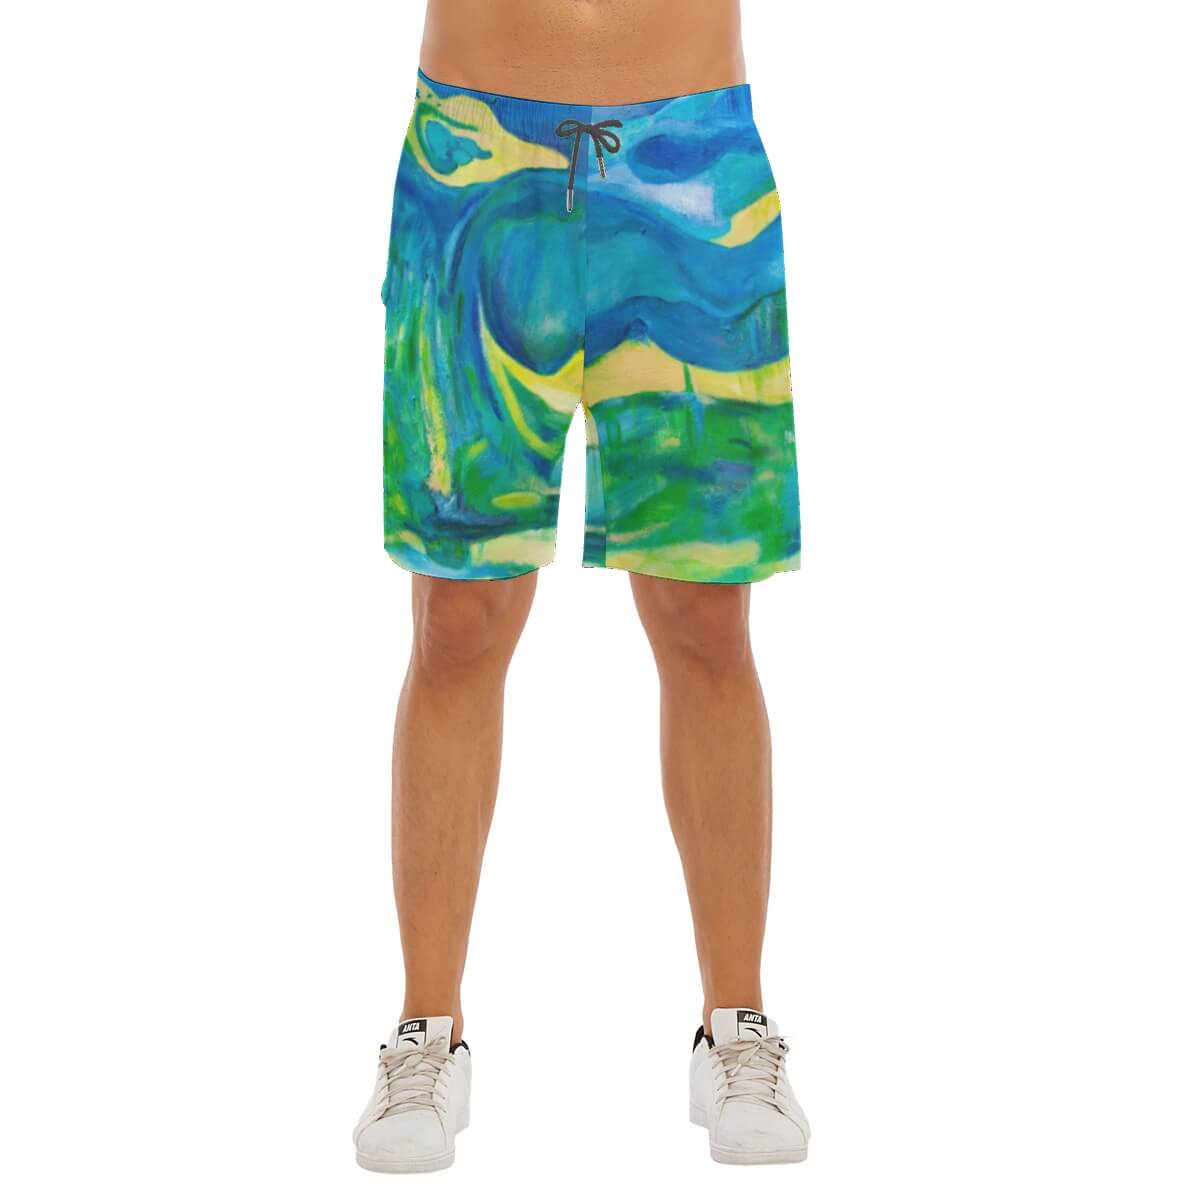 Men’s Beach Shorts Under The Sea Collection